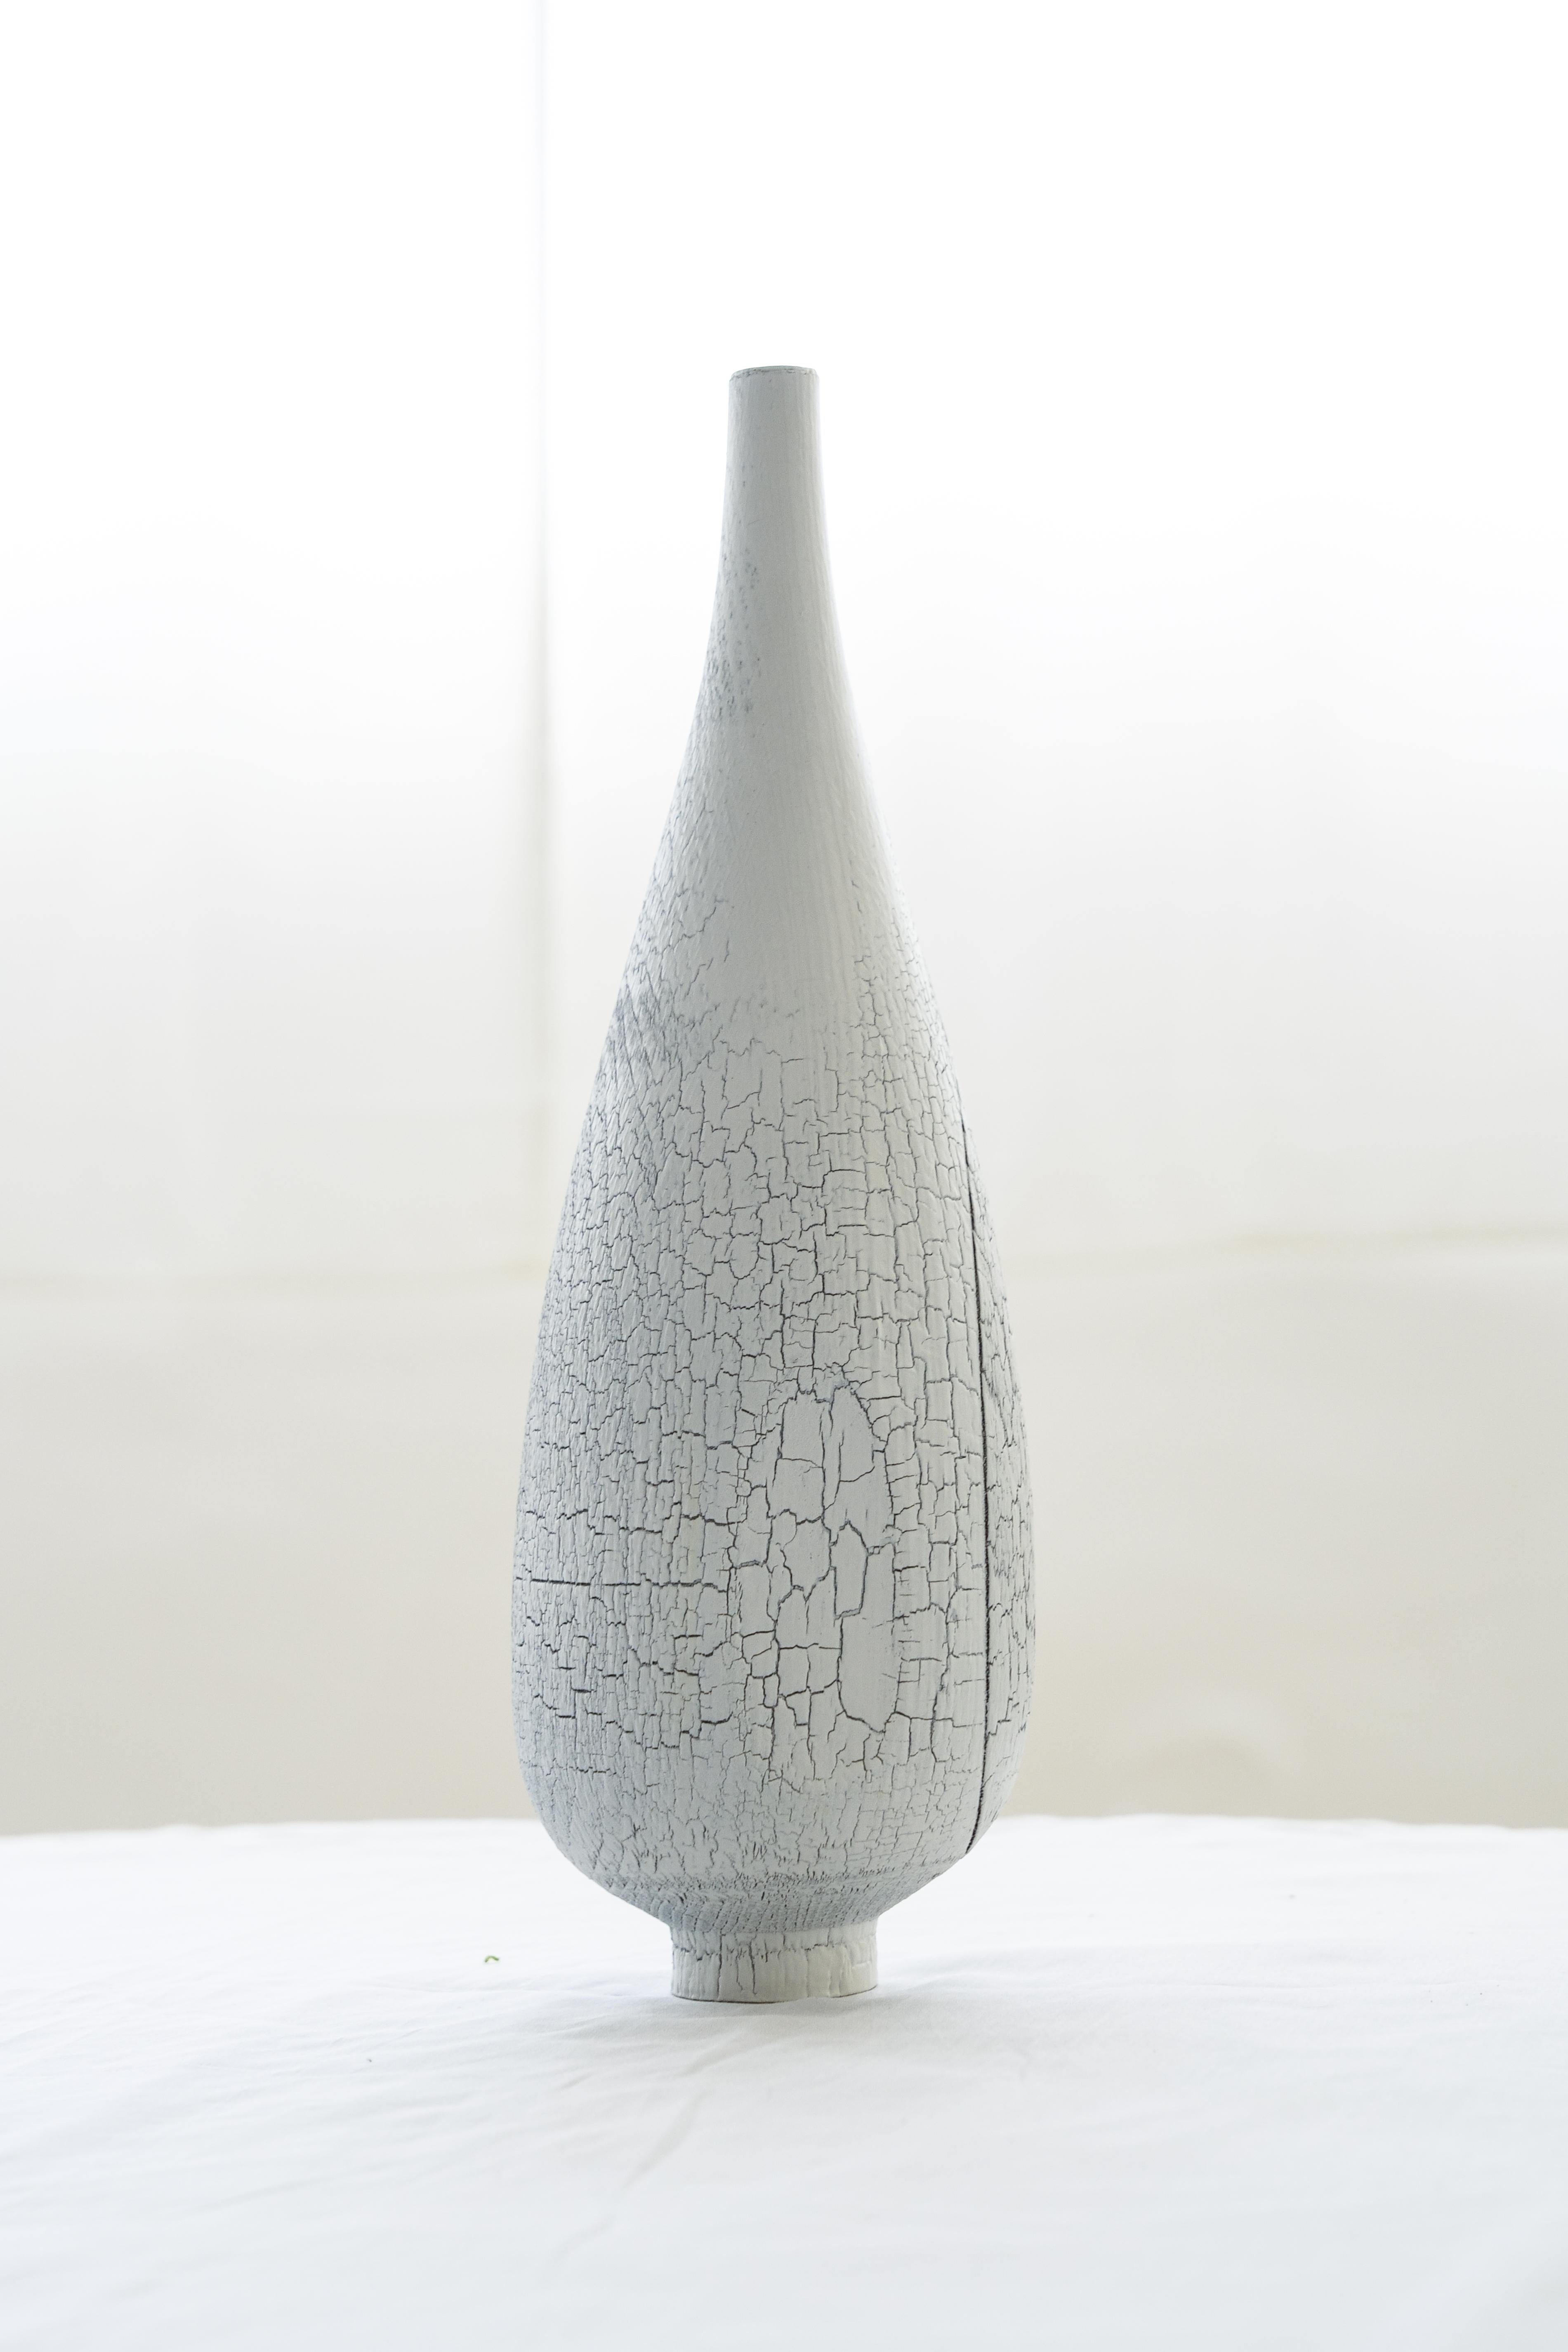 Other Set of Zebra Burnt Vase, Large White Vase and Small White Vase by Daniel Elkayam For Sale